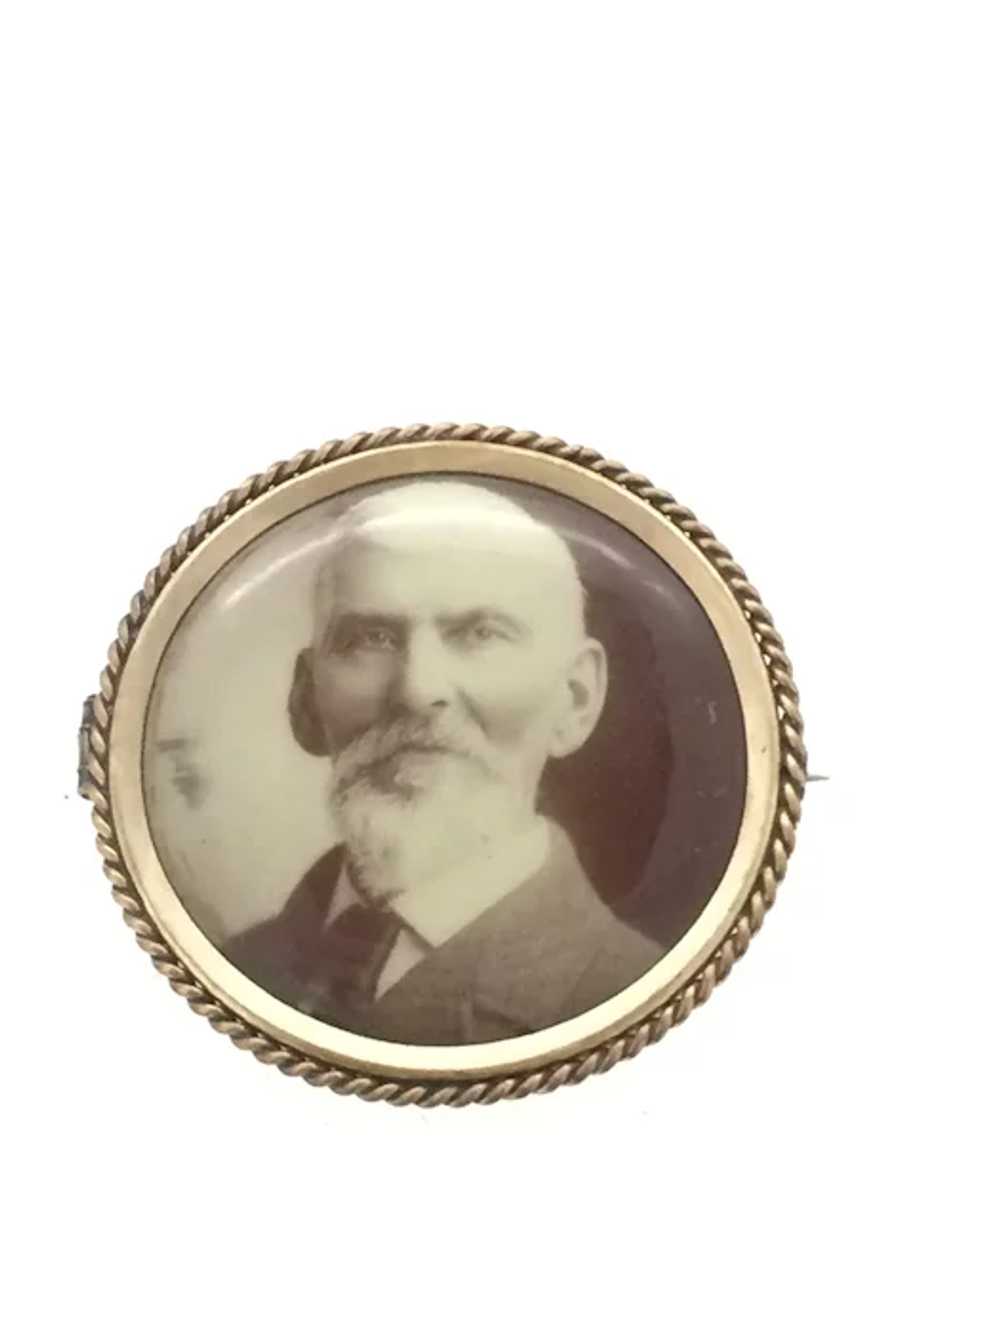 Edwardian Miniature Photograph Brooch Pin - image 2